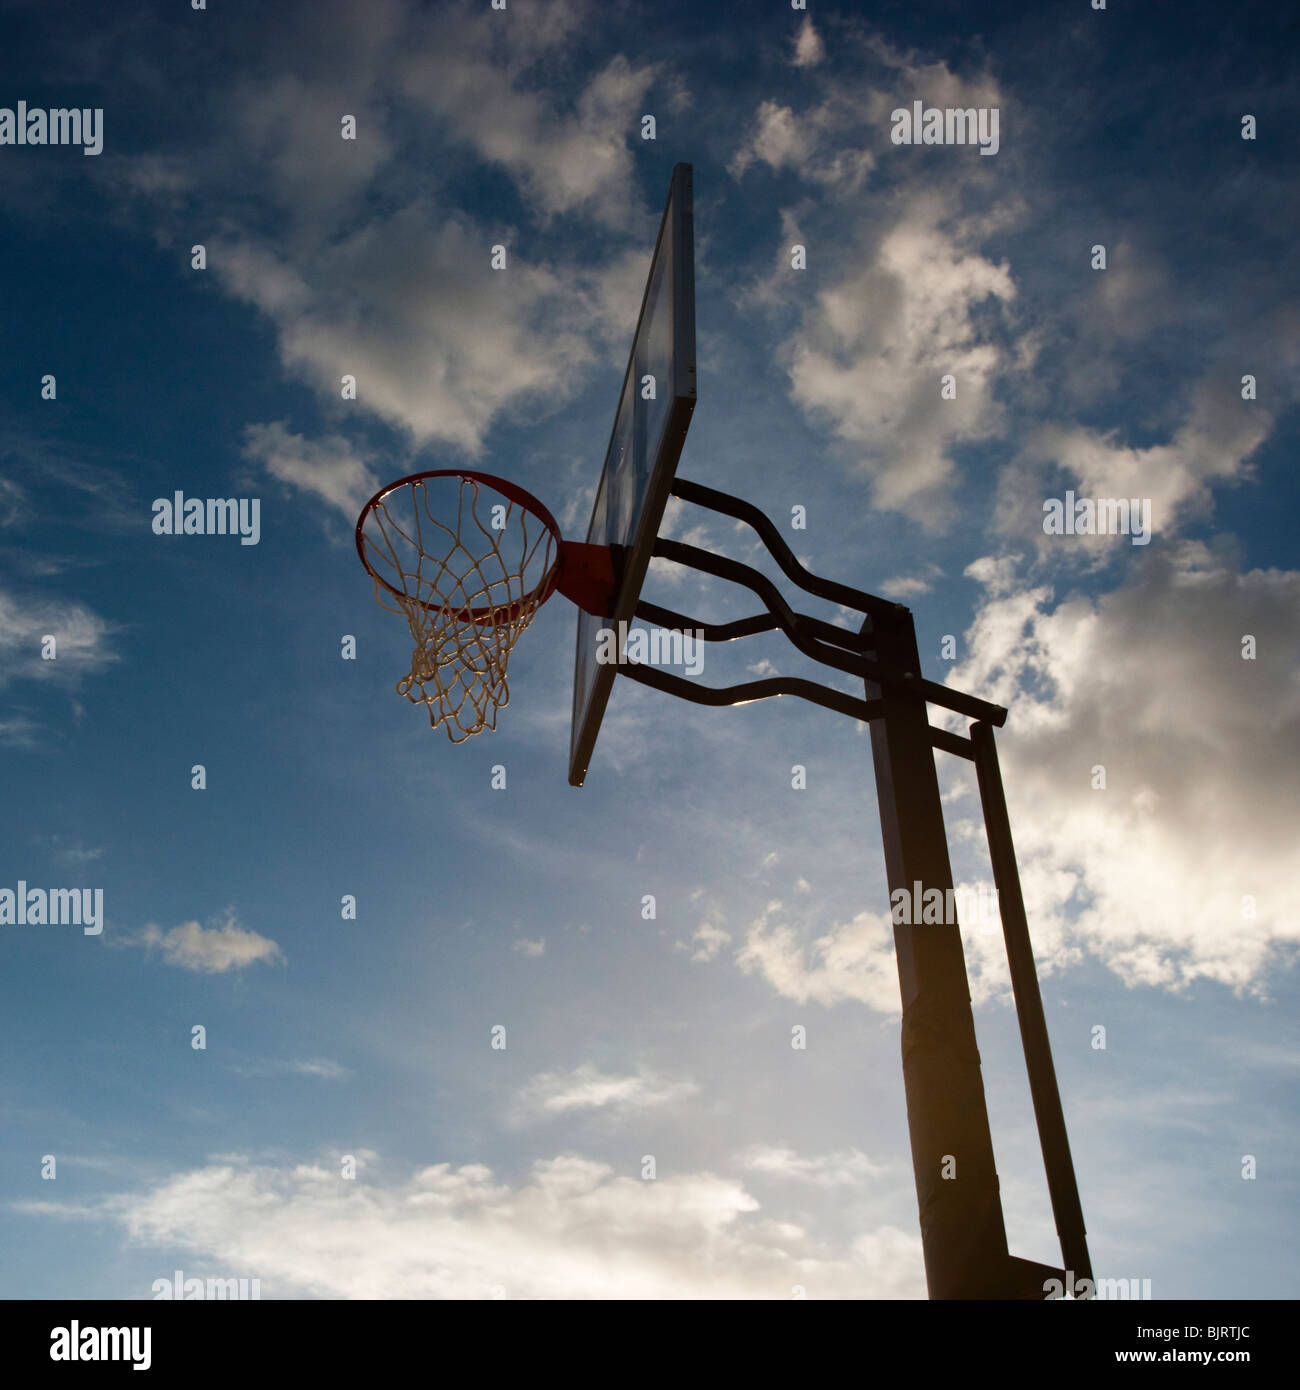 USA, Utah, Salt Lake City, Basketballkorb gegen Himmel, niedrigen Winkel Ansicht Stockfoto